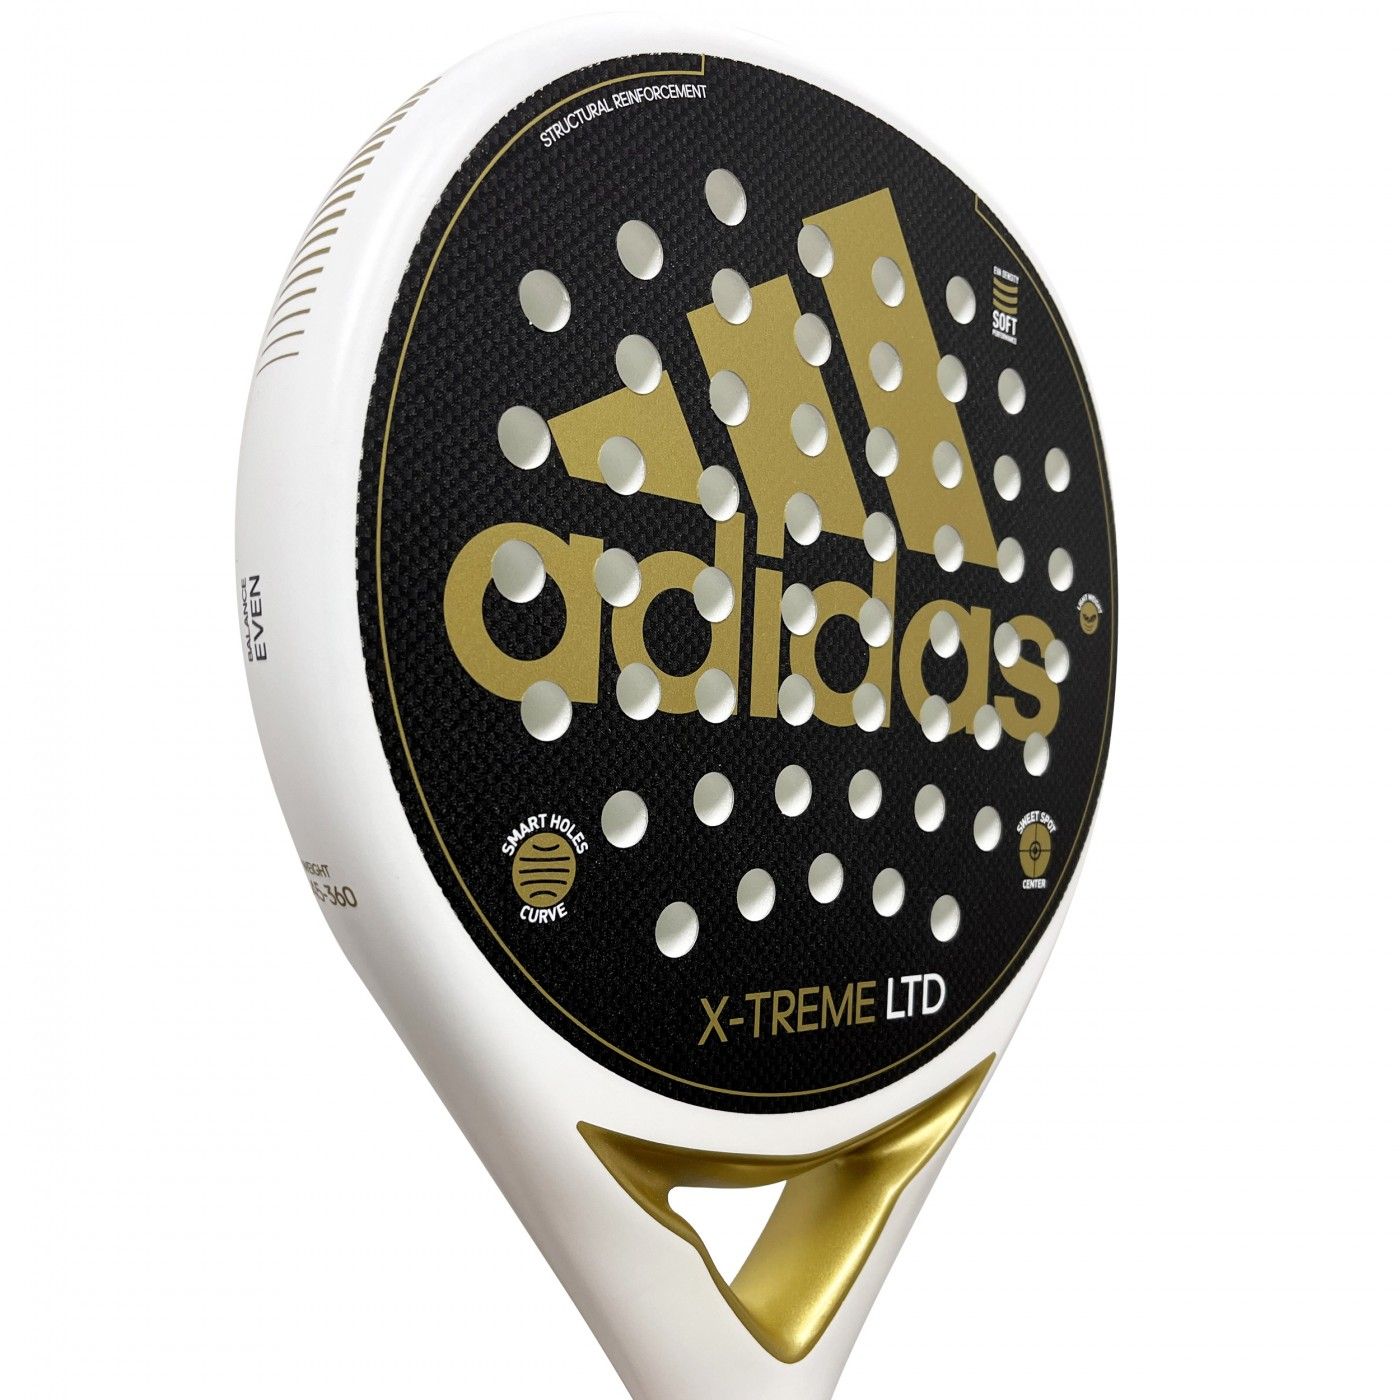 Adidas X-Treme LTD White / Gold | De Pádel